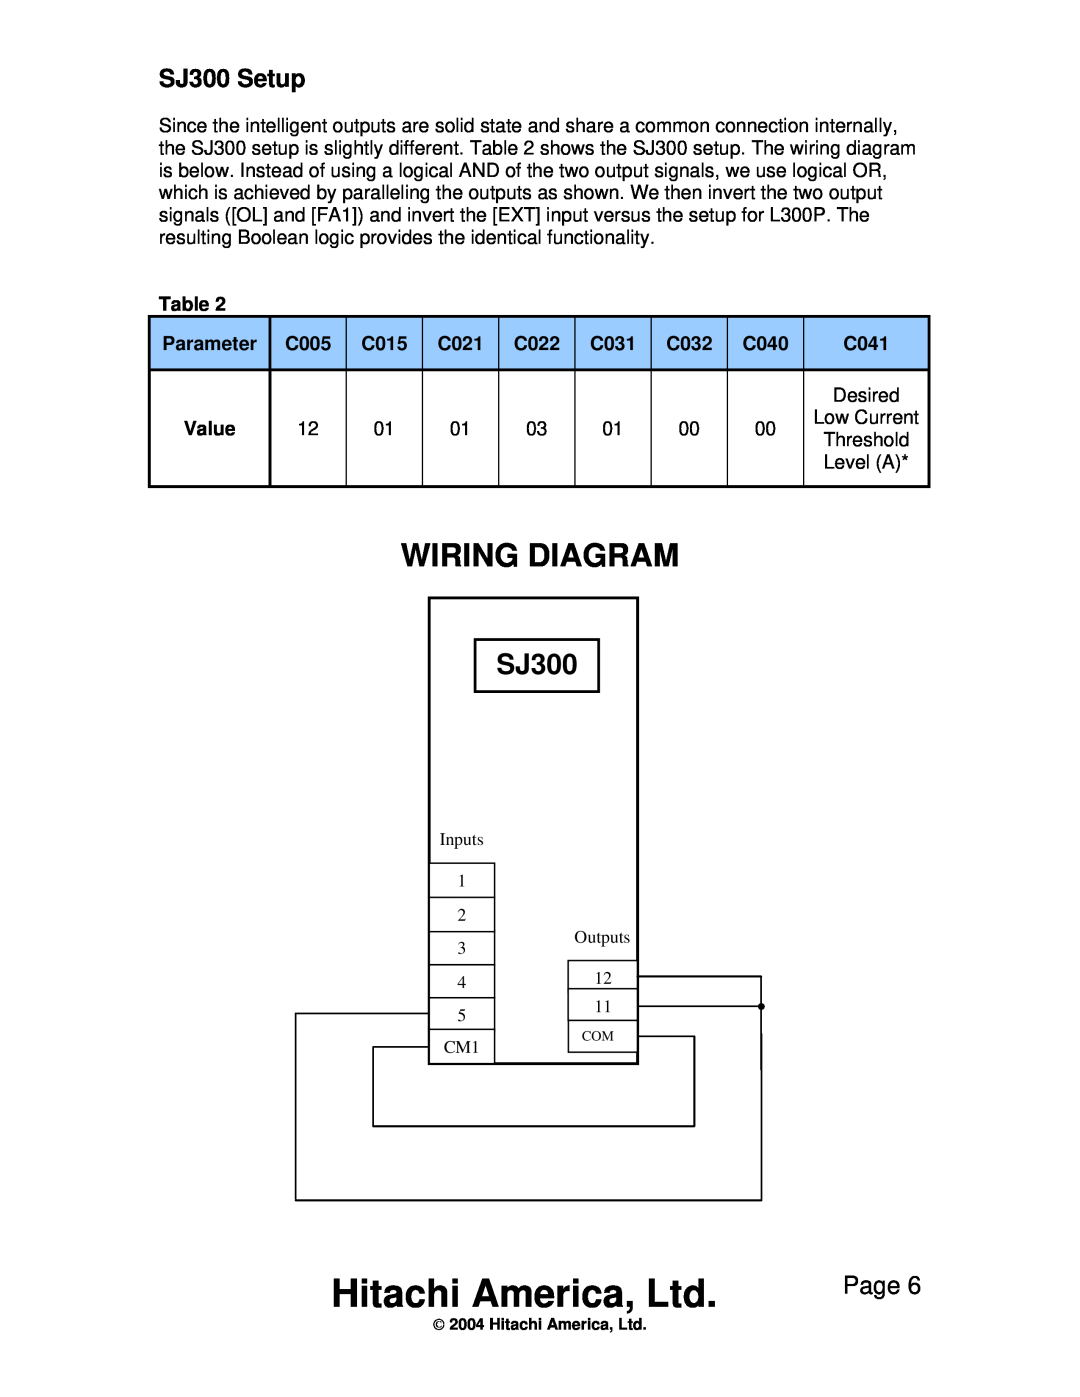 Hitachi hitachi low current trip function for pumping applications SJ300 Setup, Wiring Diagram, Page, Parameter, C005 